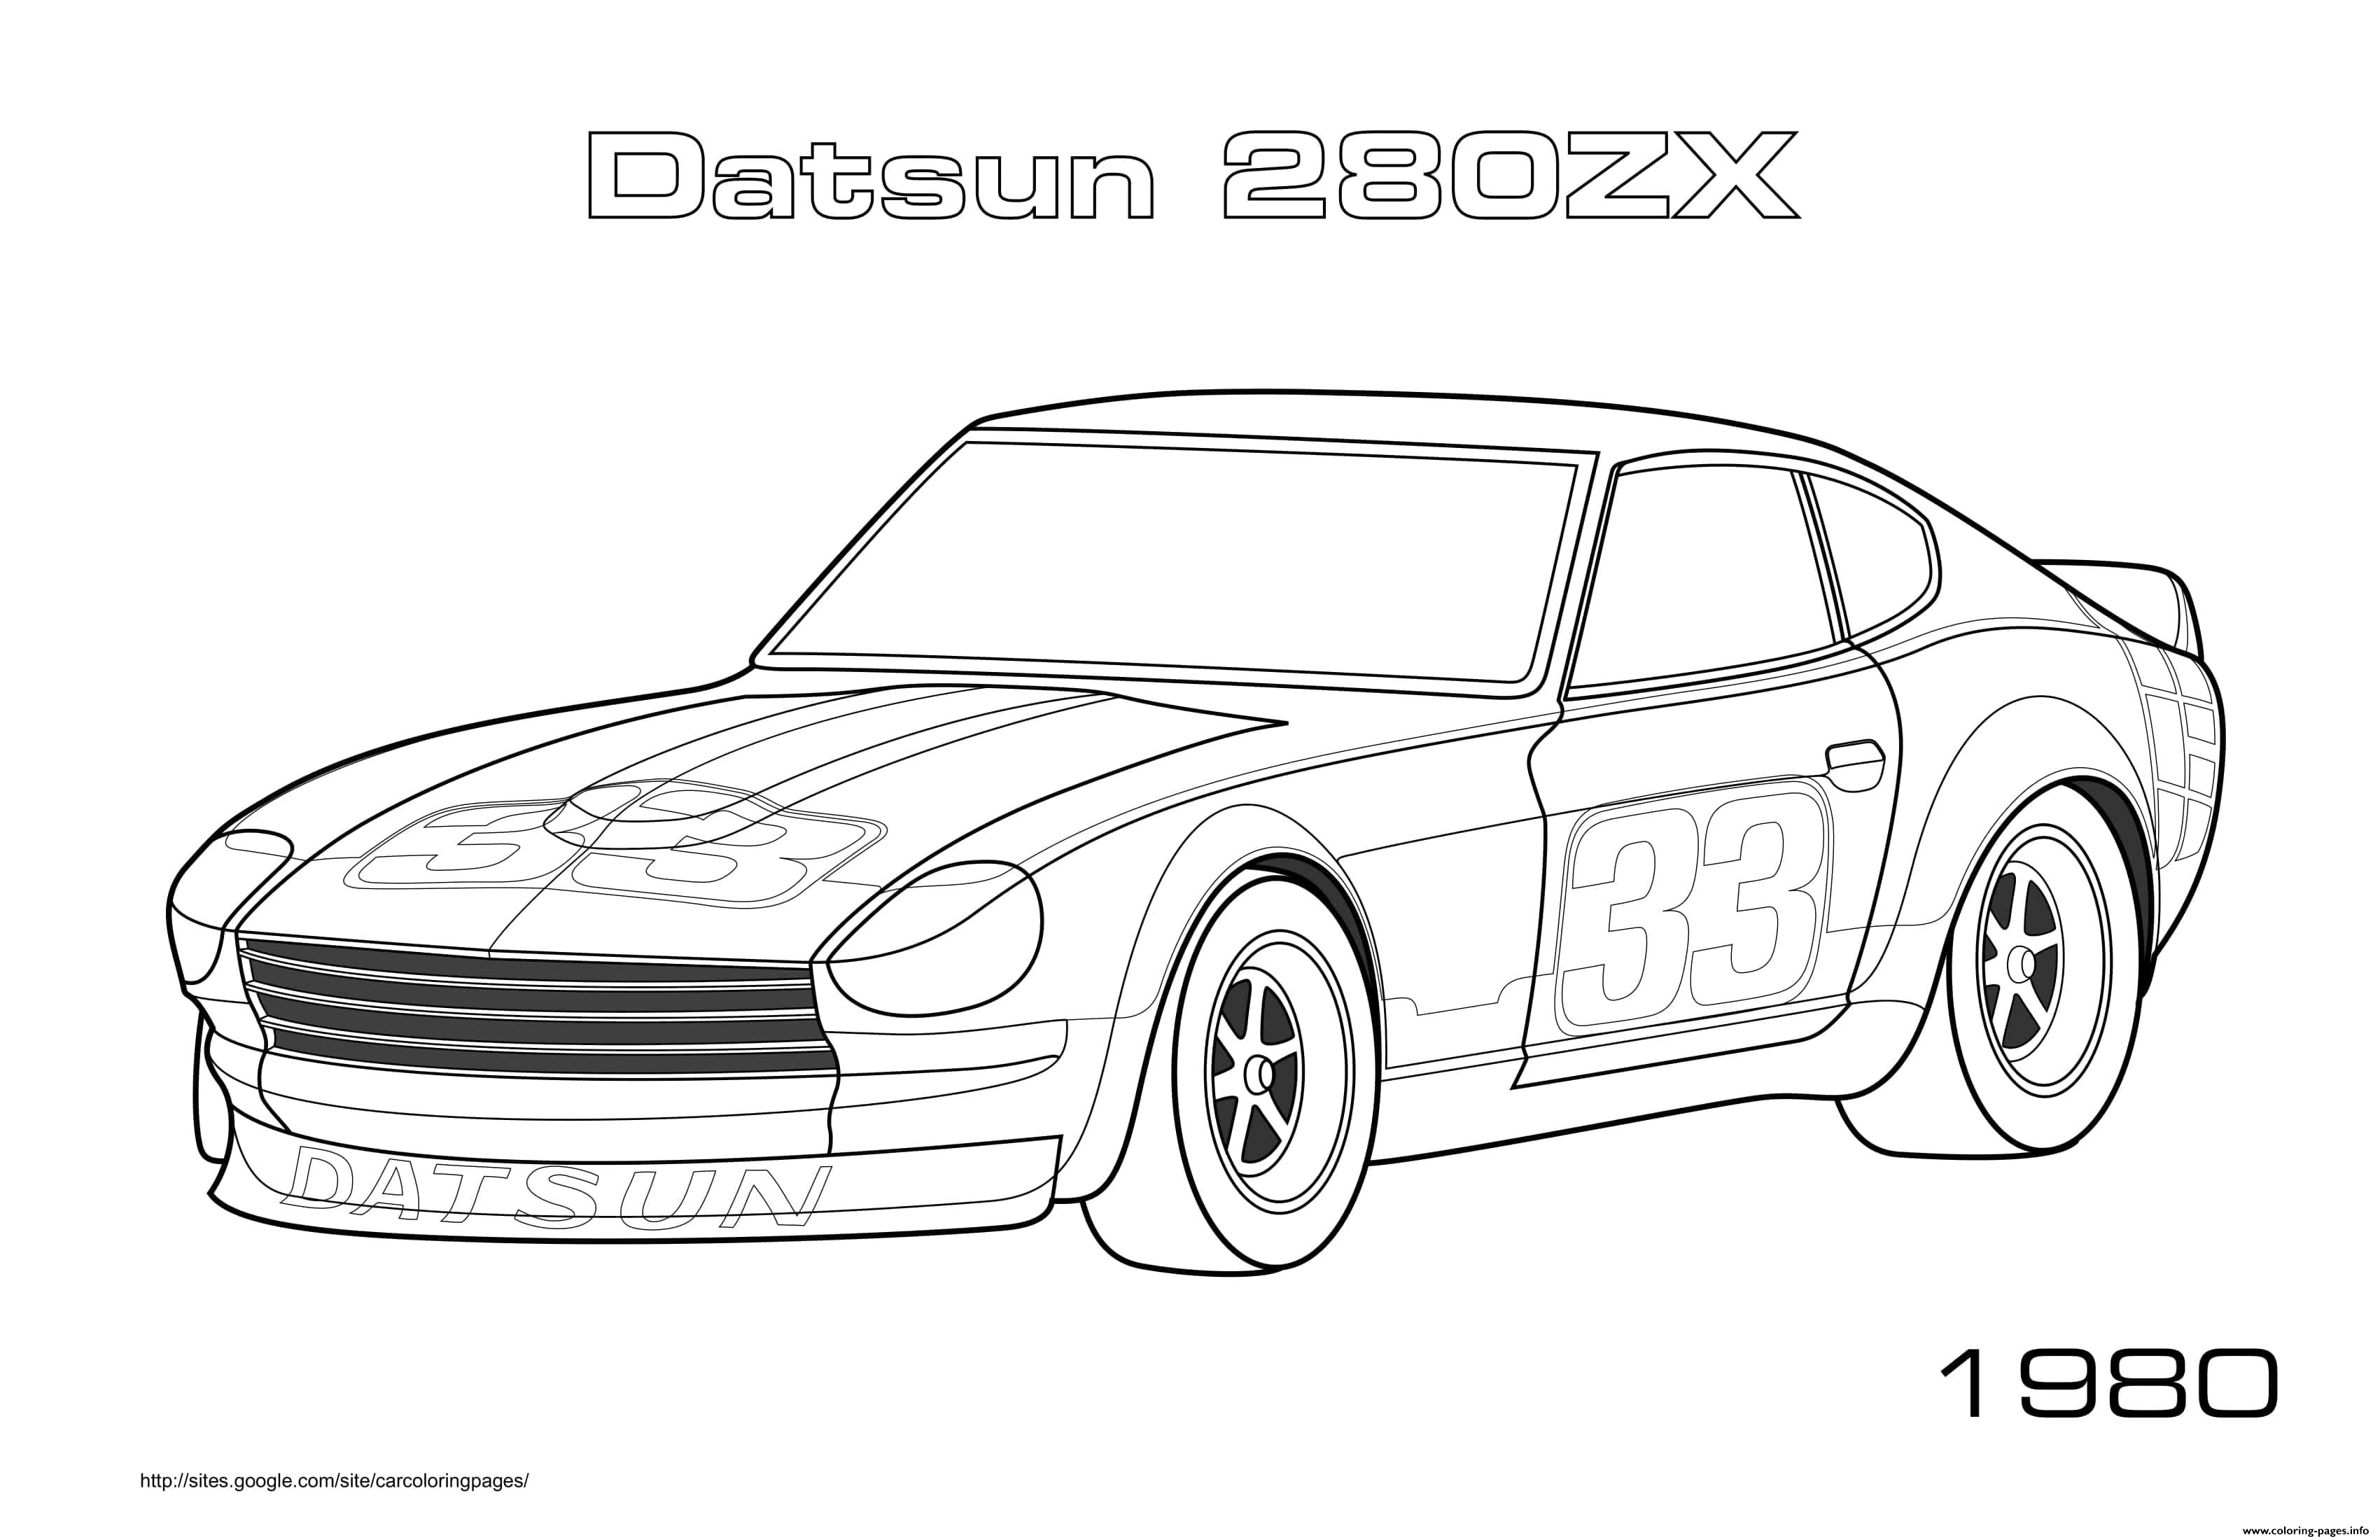 Datsun 280zx 1980 coloring